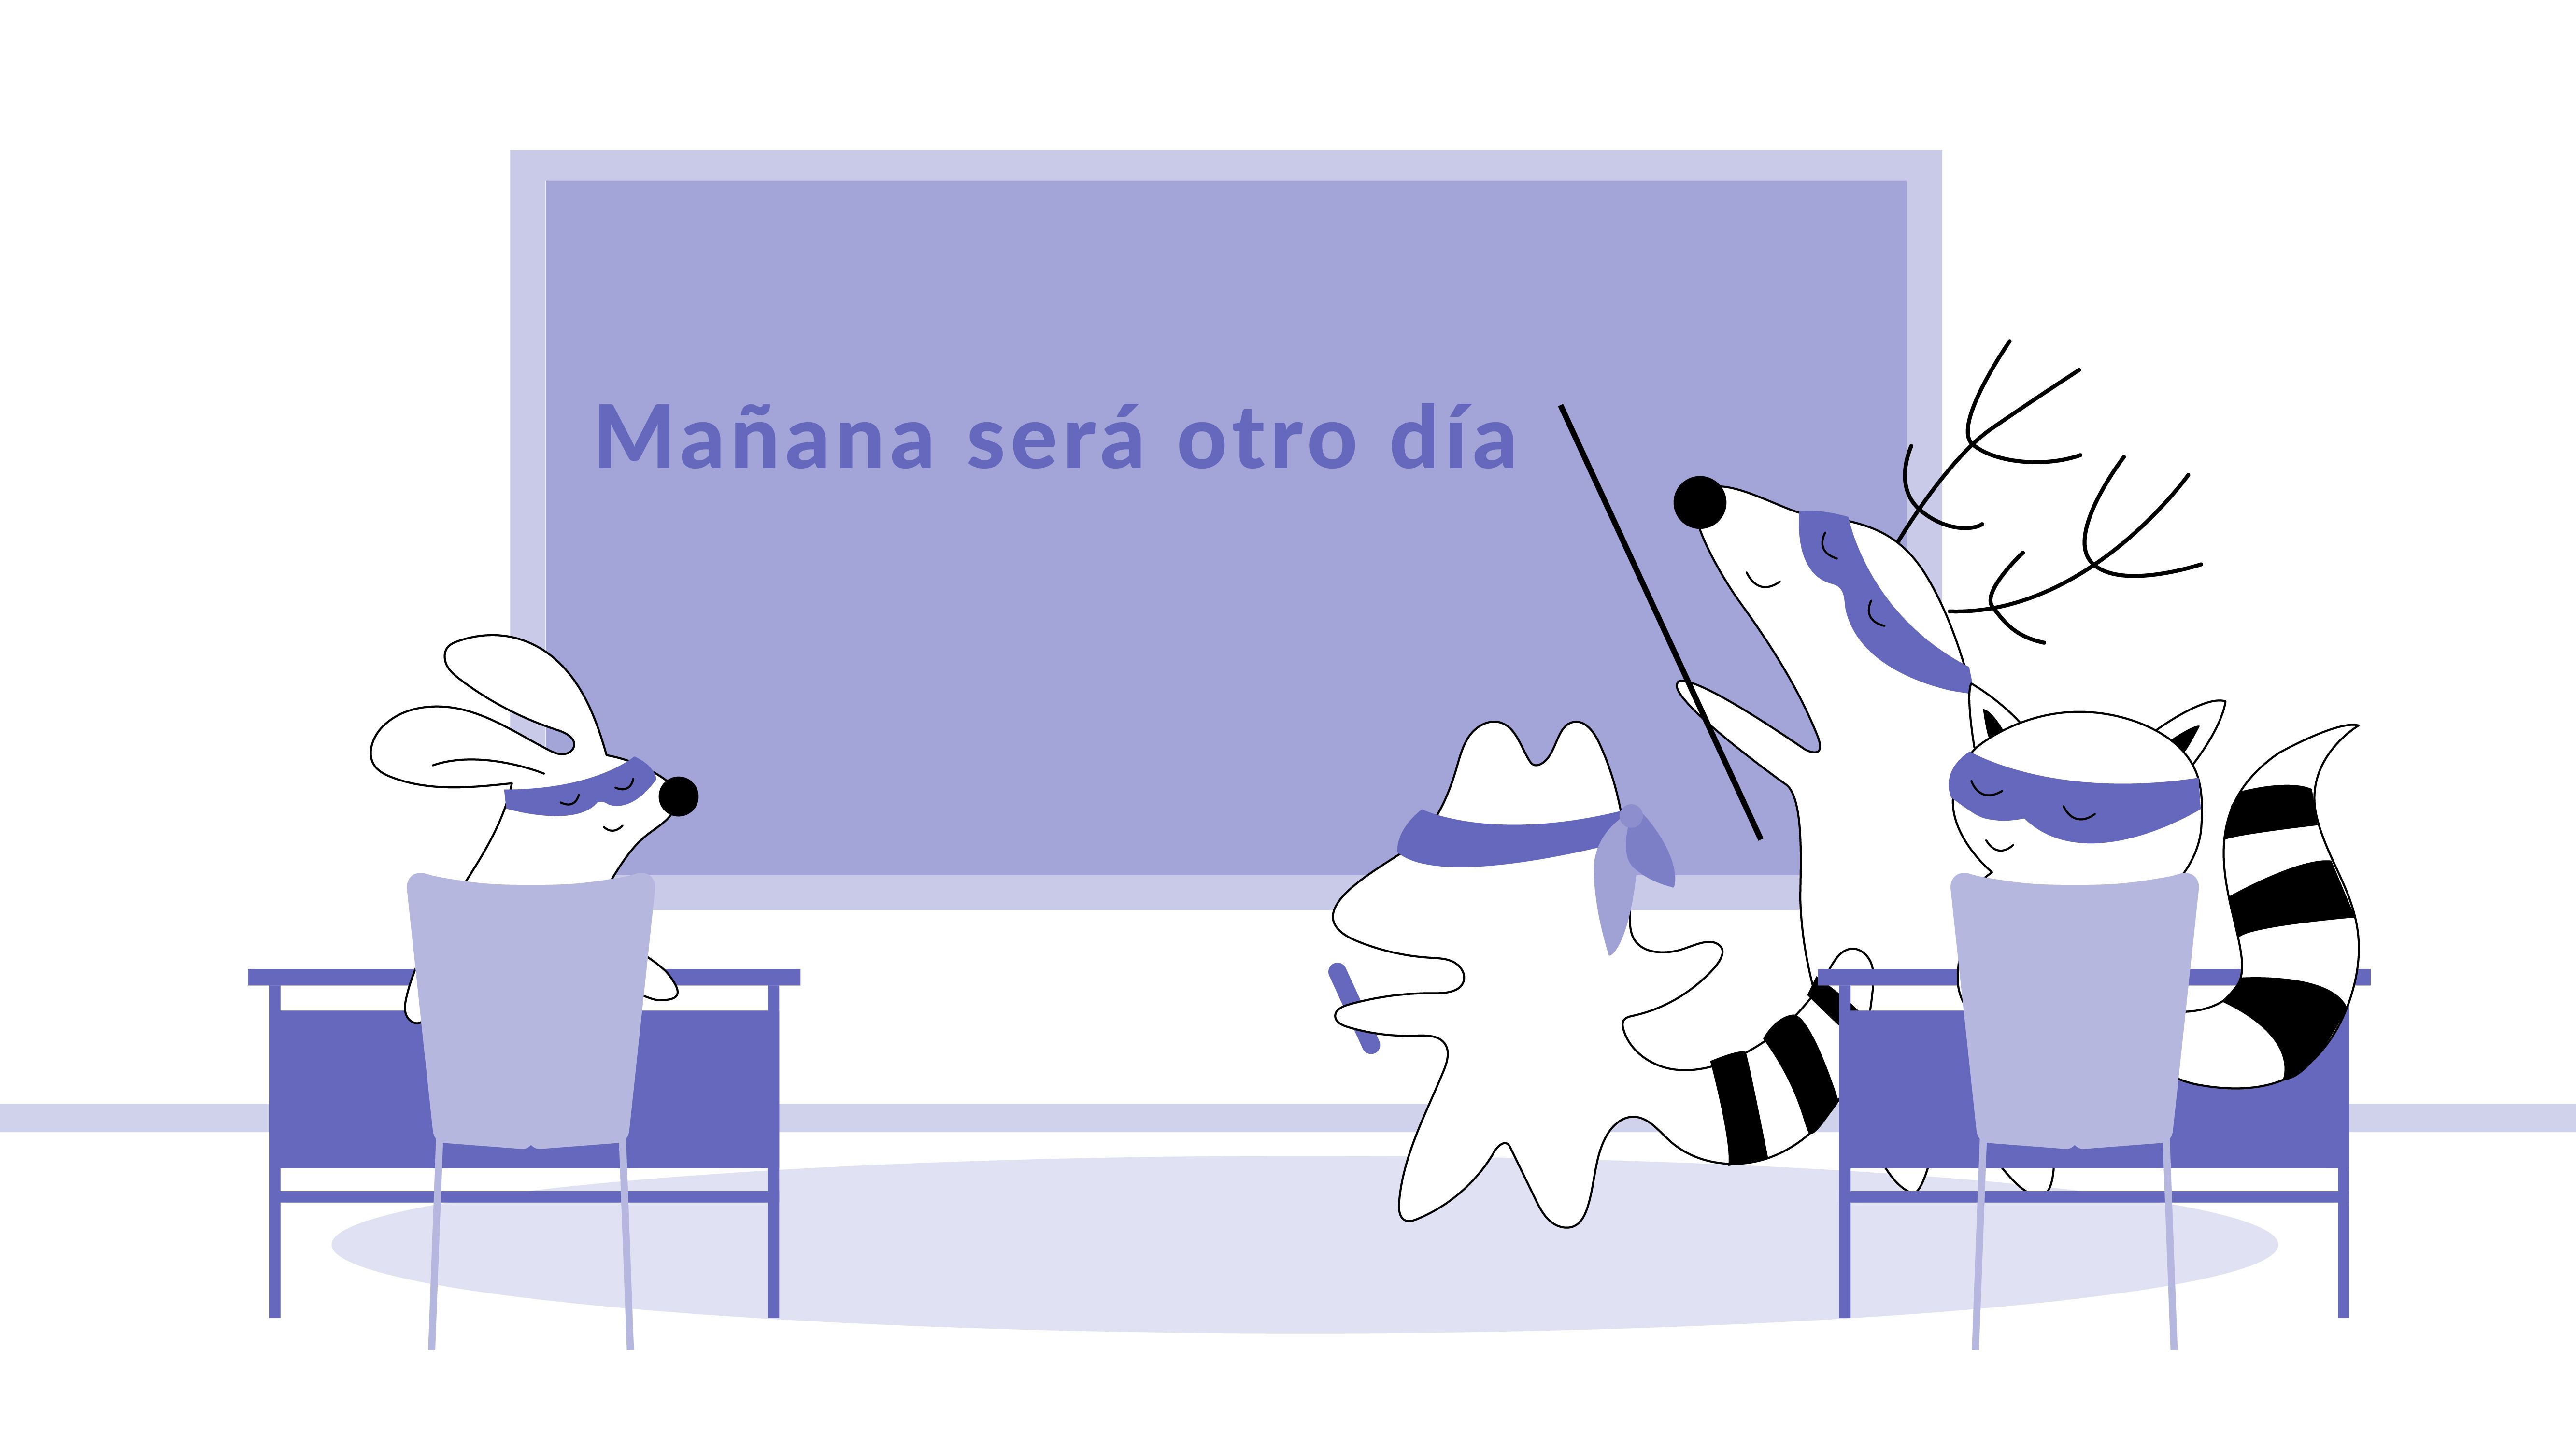 Iggy and Soren are in a classroom, writing on the blackboard, “Mañana será otro día.”